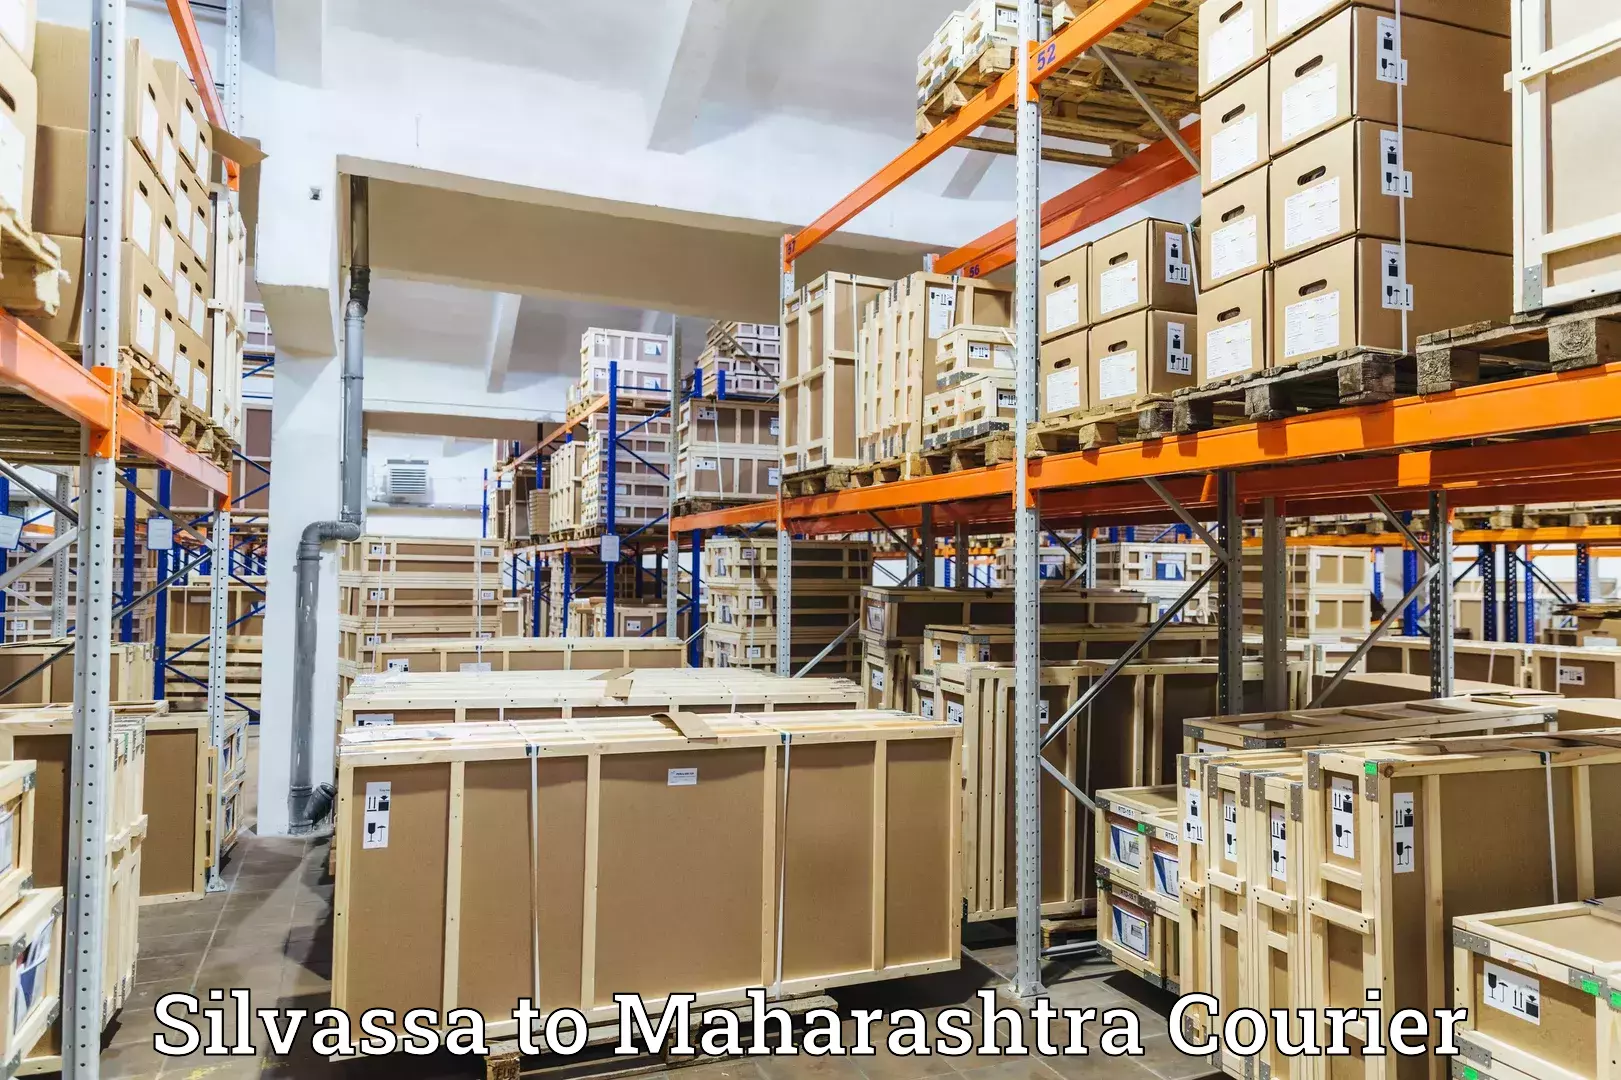 Subscription-based courier Silvassa to Maharashtra